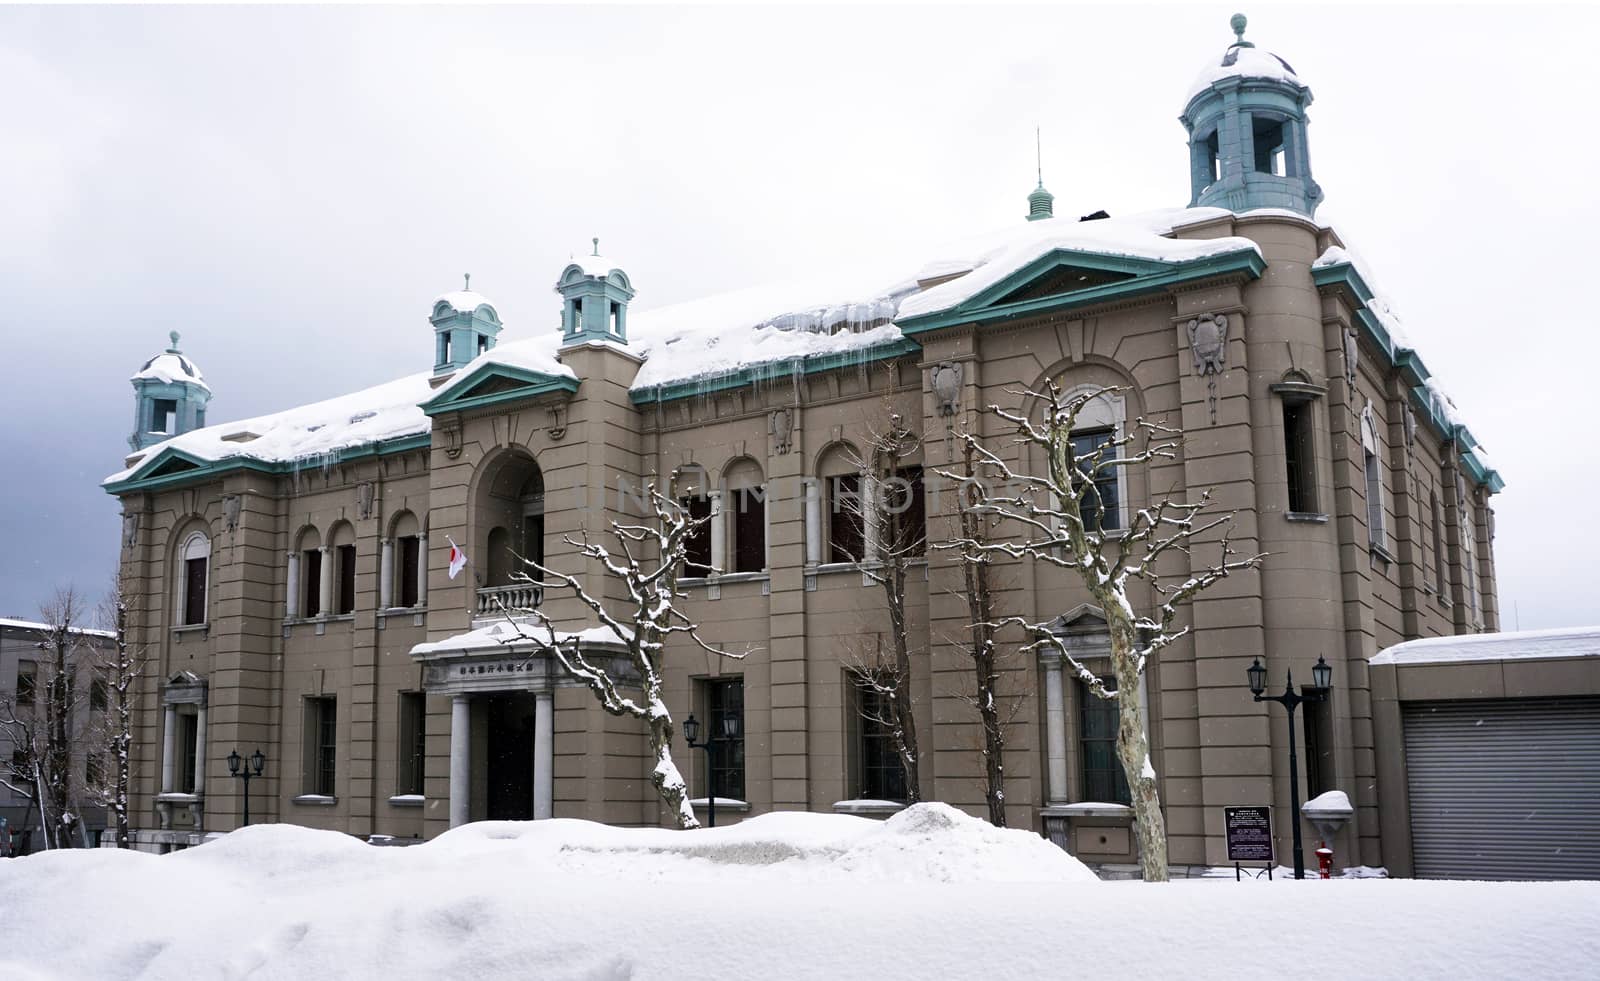 Otaru old town city building in snow winter by polarbearstudio